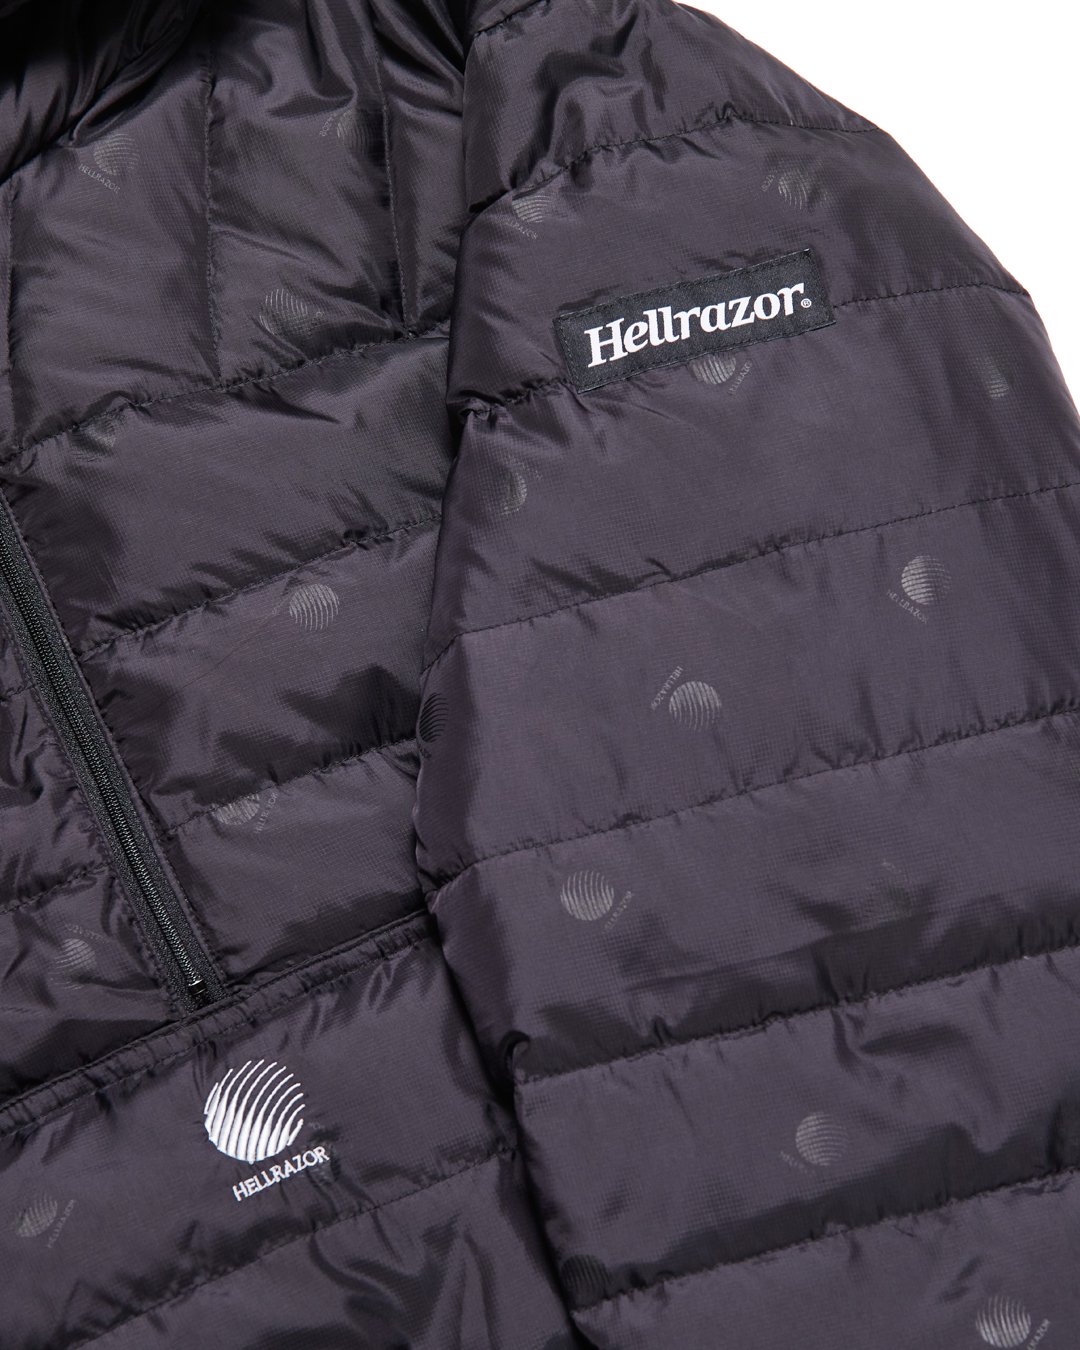 Hellrazor logo pulloverhoodeddown jacketもしよければ着用写真欲しいです